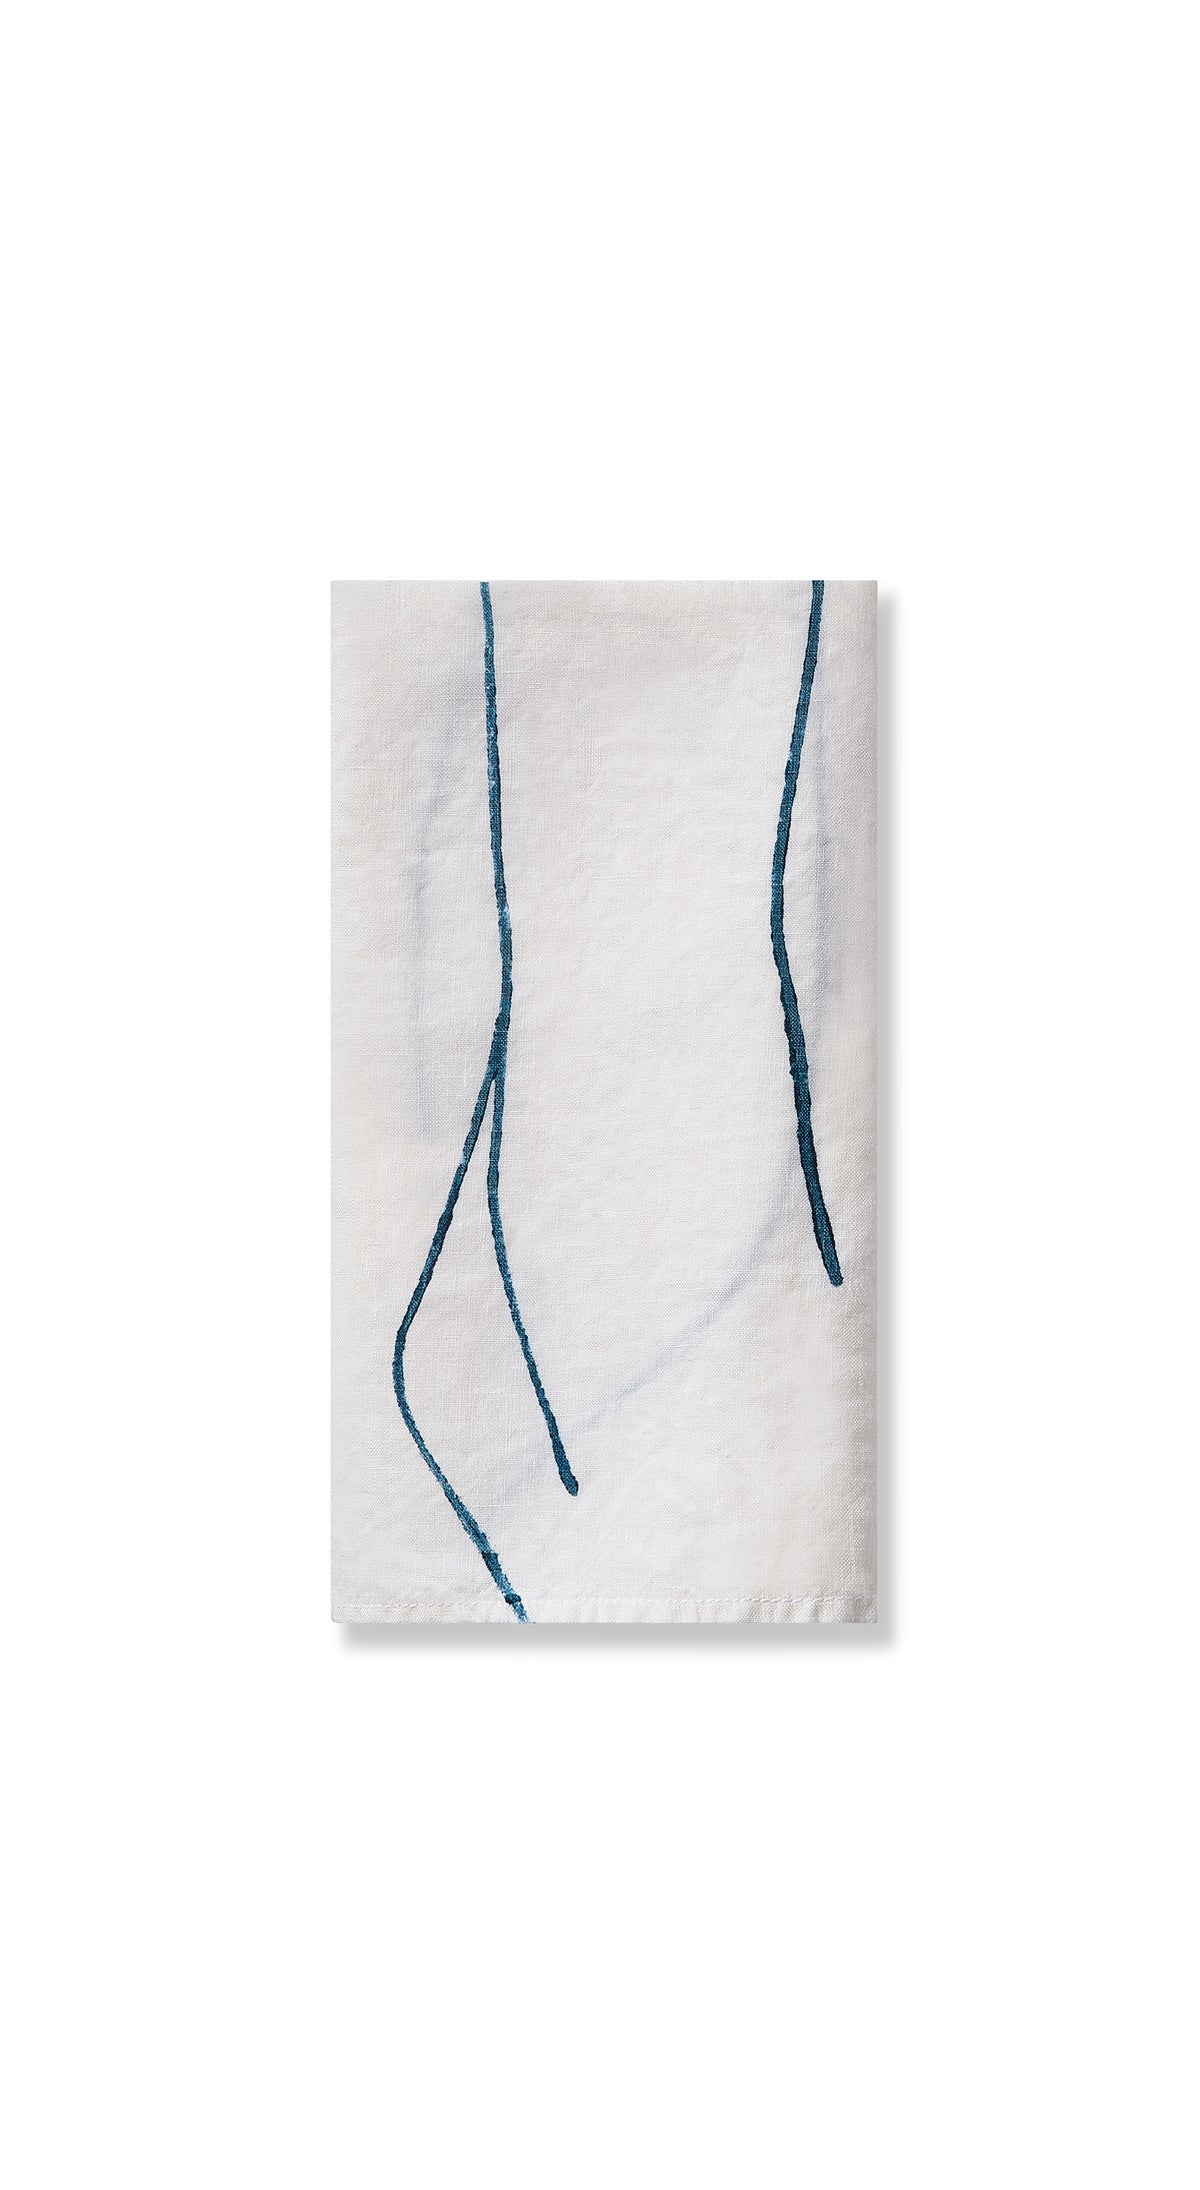 Nude Linen Napkin "Female Chest" in Midnight Blue, 50x50cm